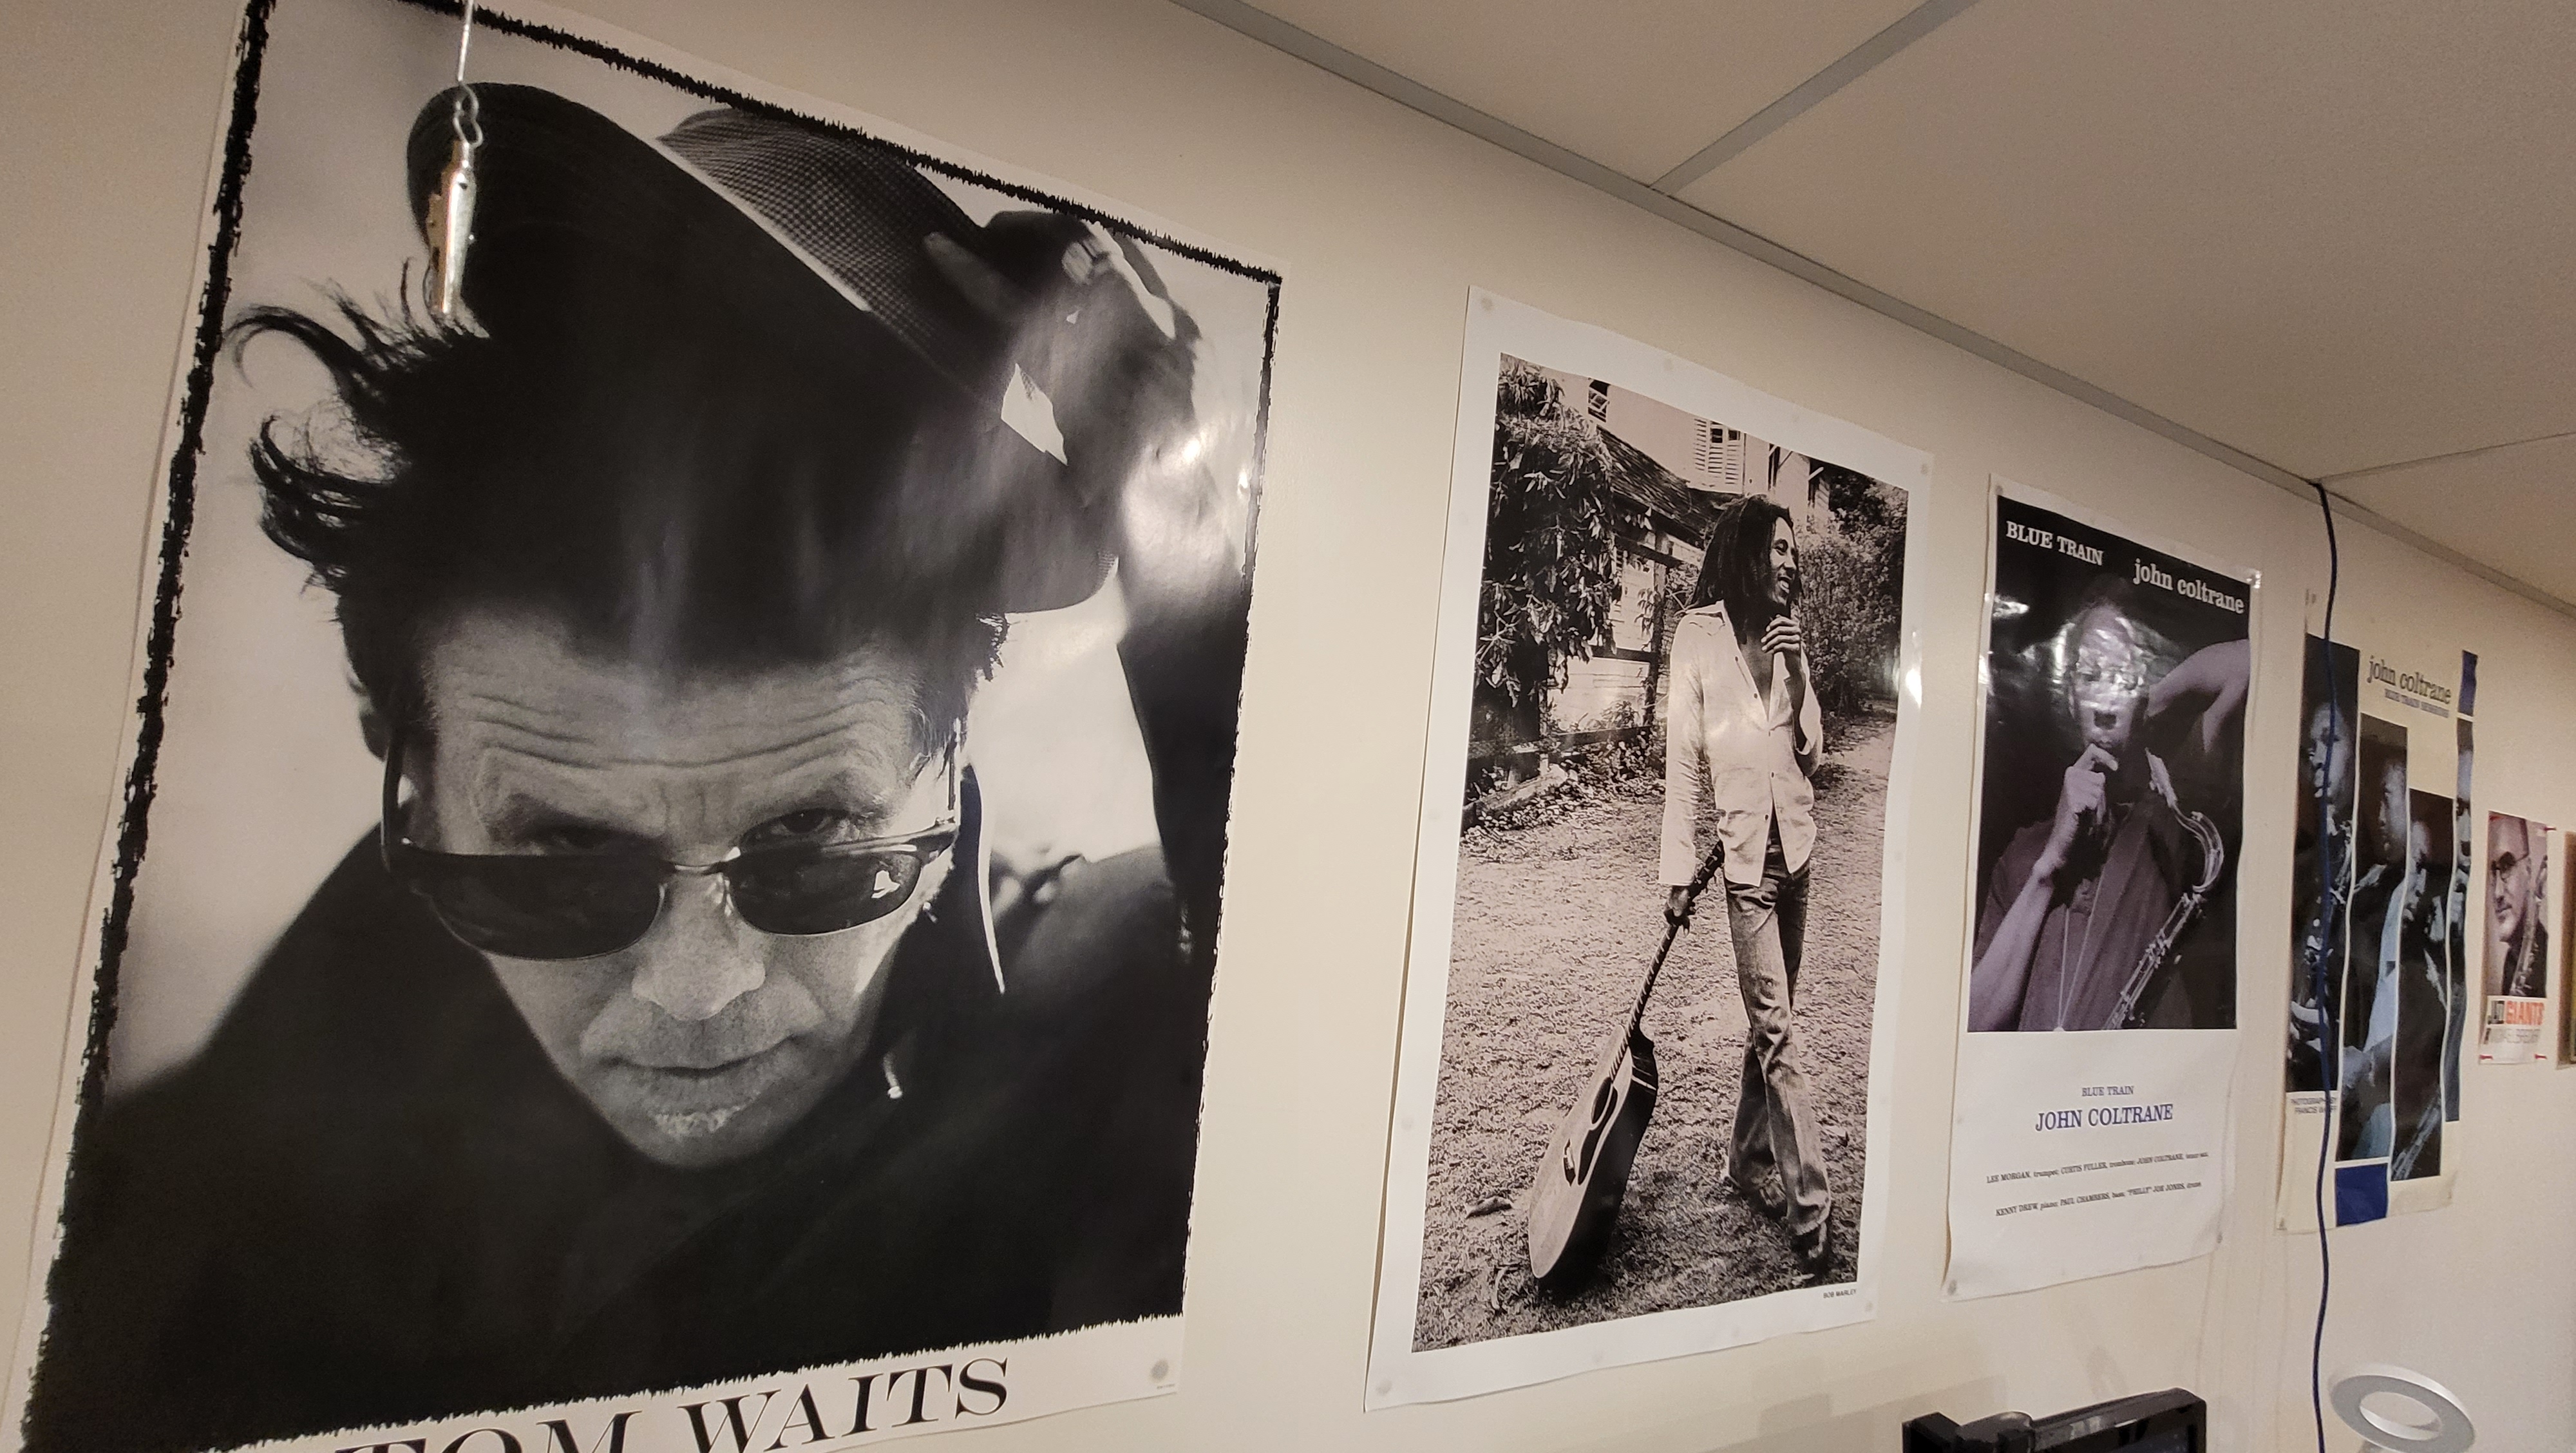 Posters of Tom Waits, Bob Marley, John Coltrane, Michael Brecker, James Brown